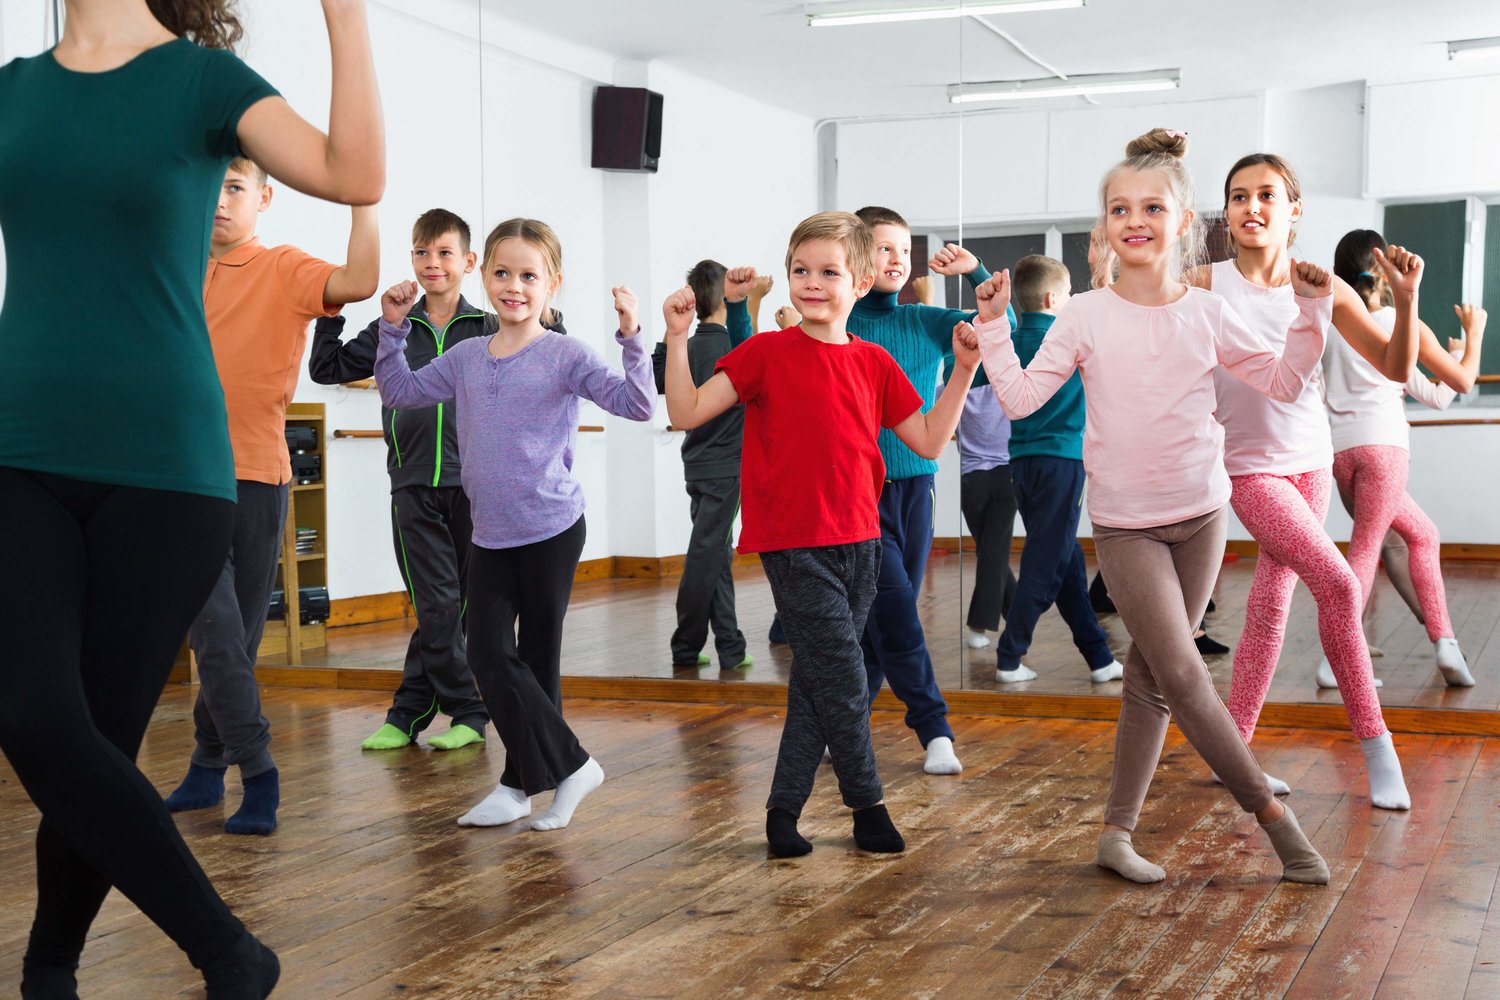 Dance can improve confidence, self-esteem, teamwork and problem-solving skills.